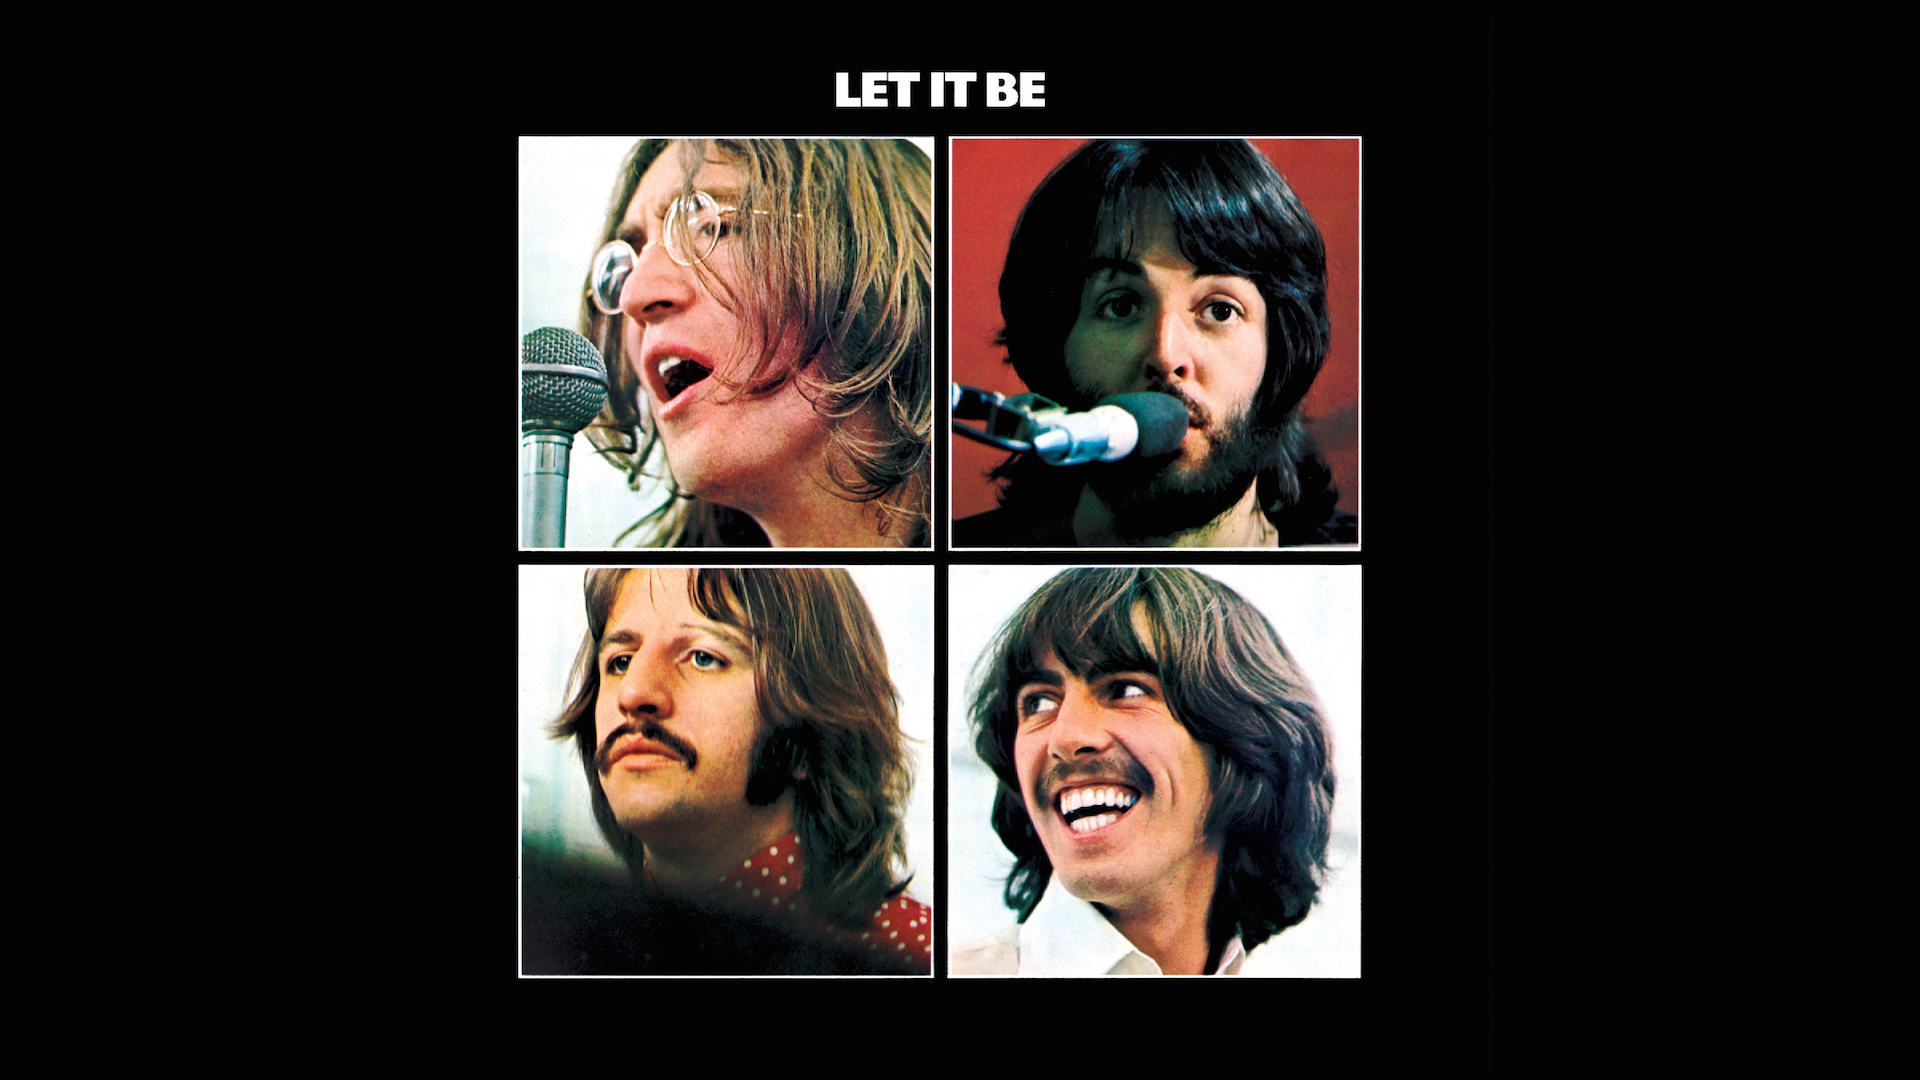 People 1920x1080 The Beatles John Lennon Paul McCartney Ringo Starr George Harrison band men